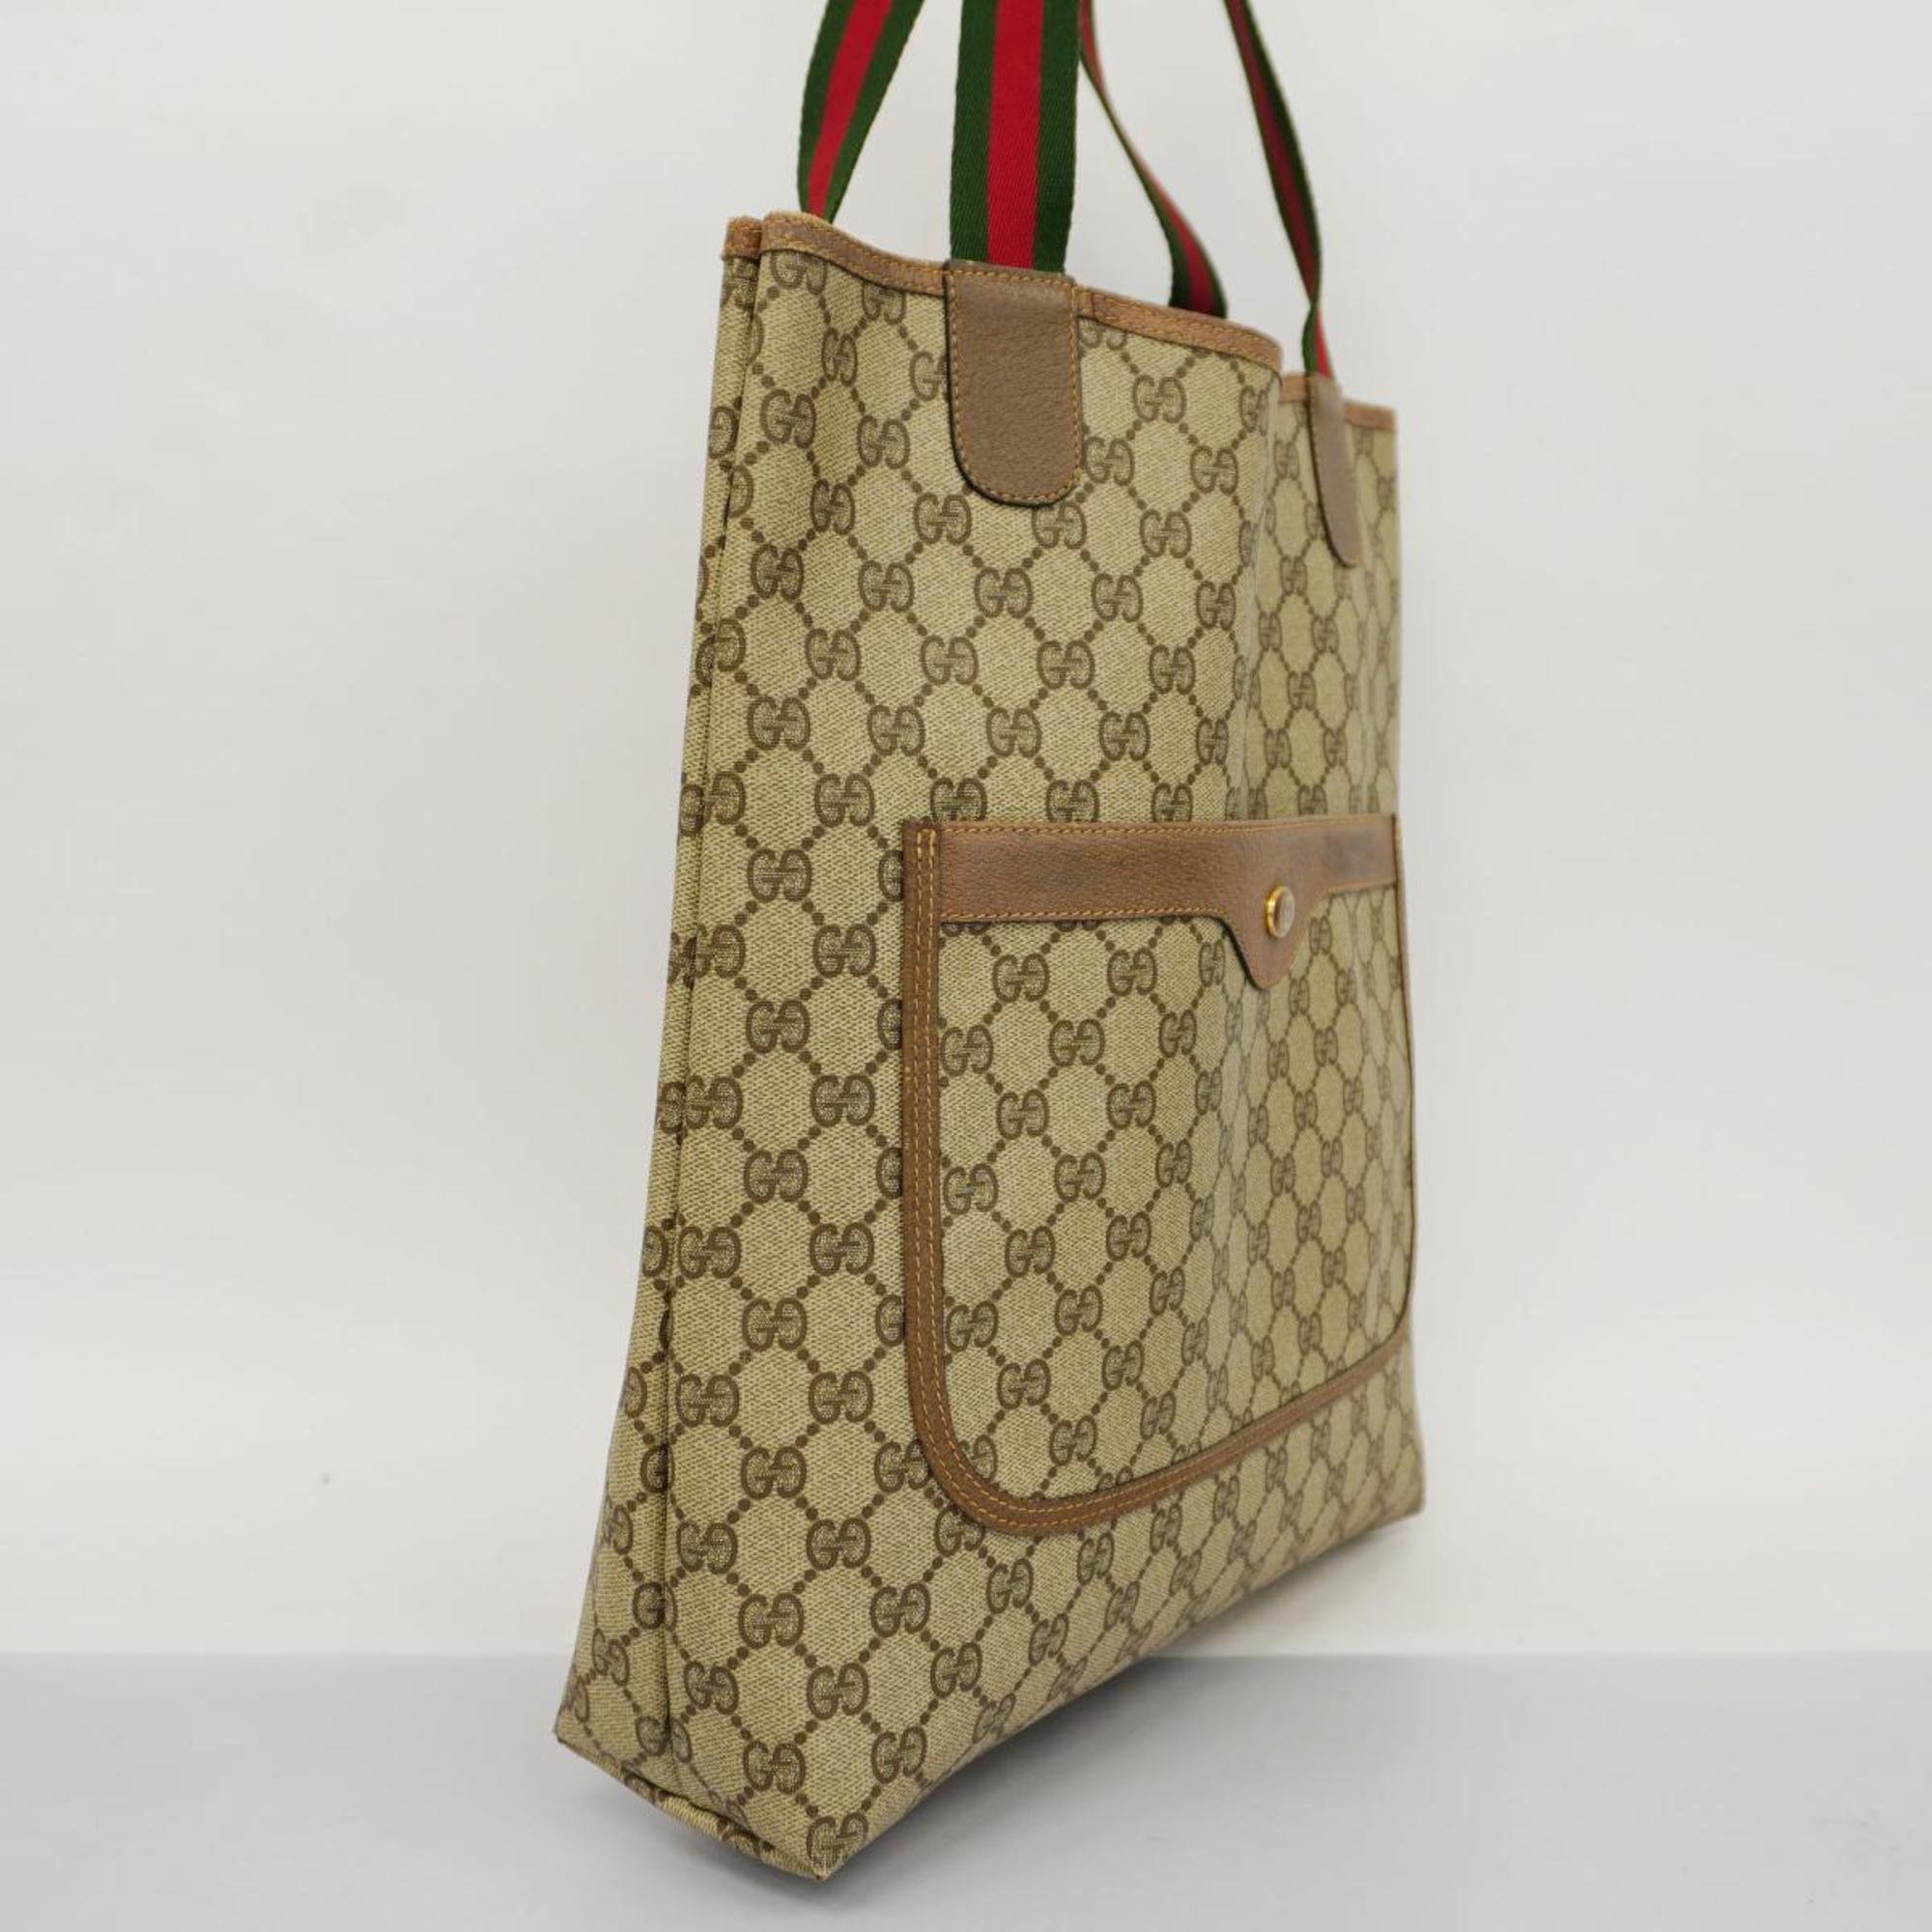 Gucci Tote Bag GG Supreme Sherry Line 39 02 003 Brown Beige Women's